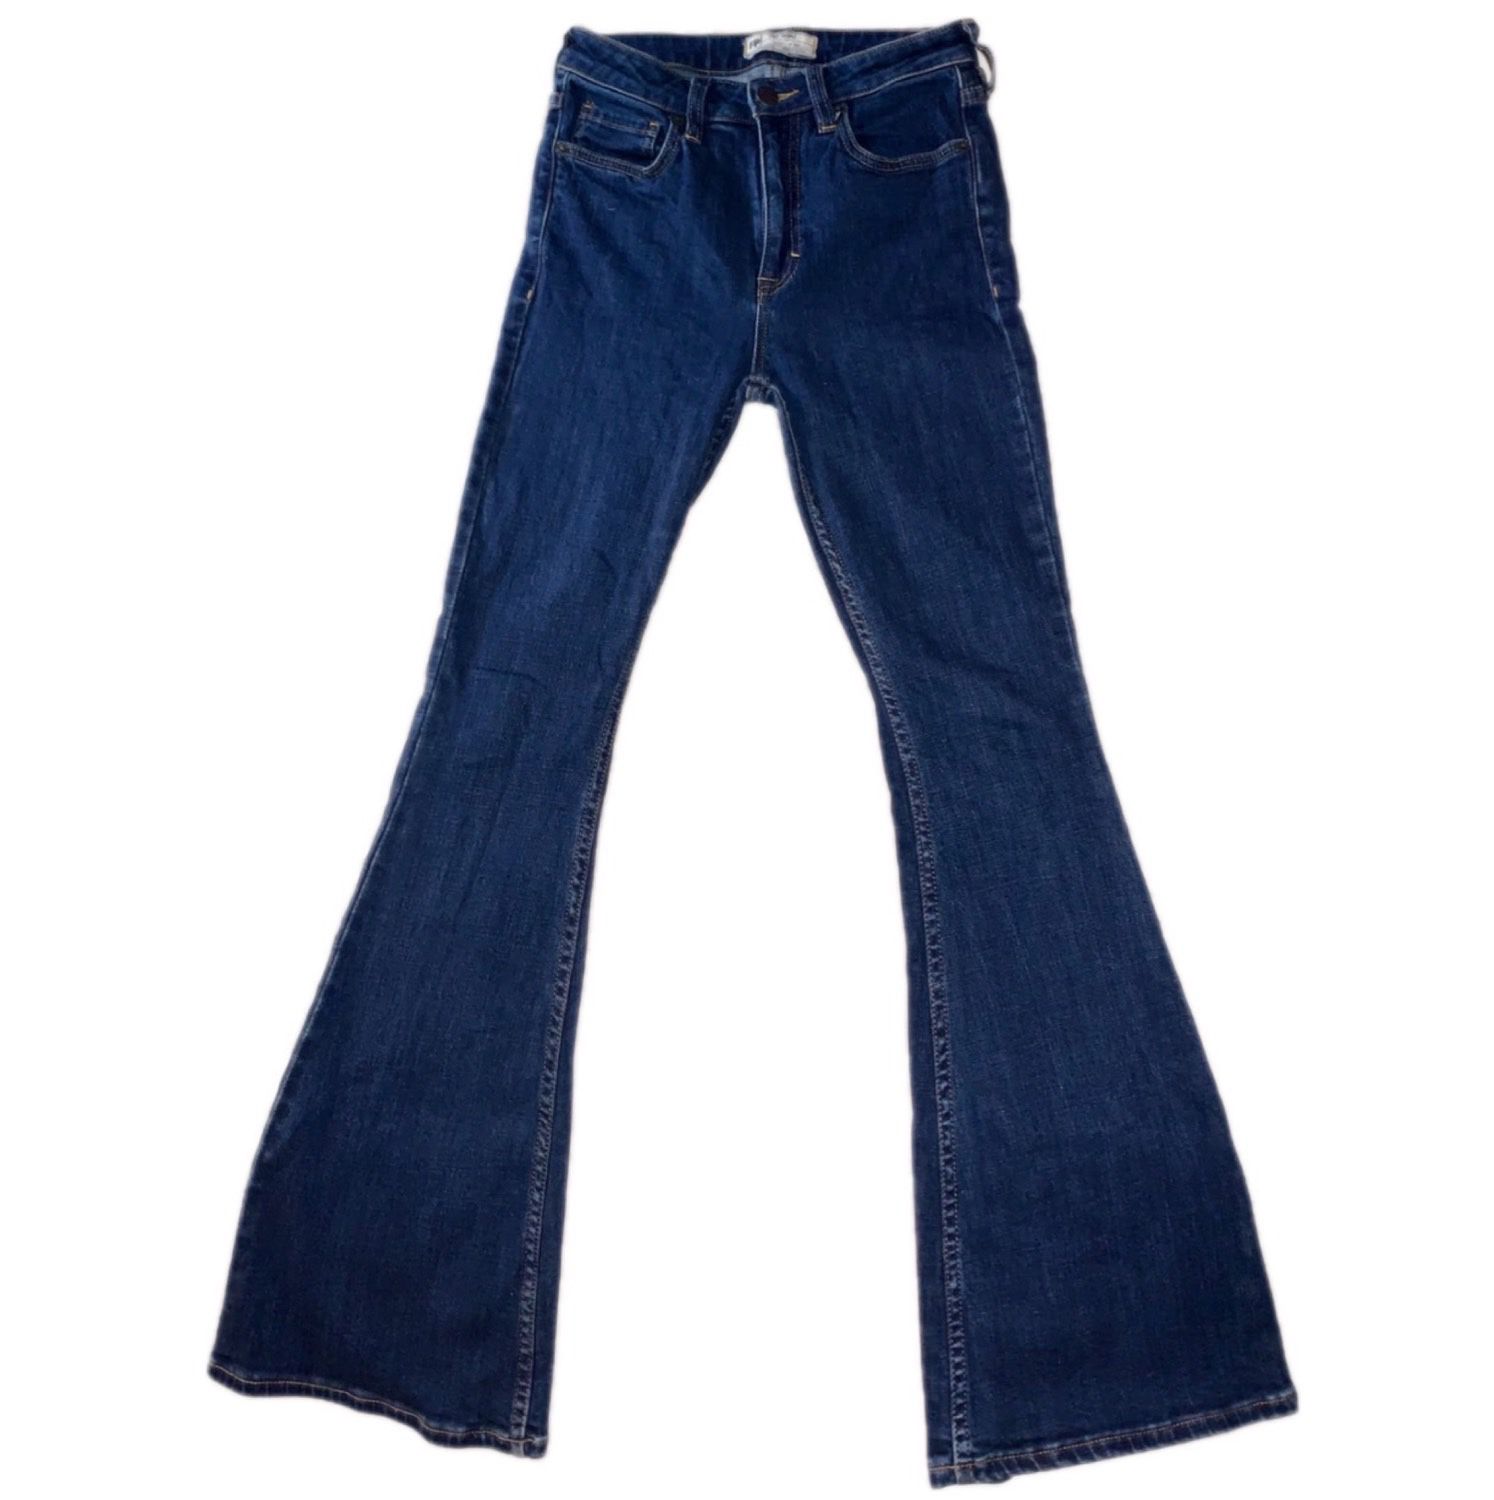 EUC Free People Jeans Size 25 Flare Wide Leg (Vintage-Style Boho) Blue Denim, Like Levis, Madewell, Anthropologie Bell Bottom